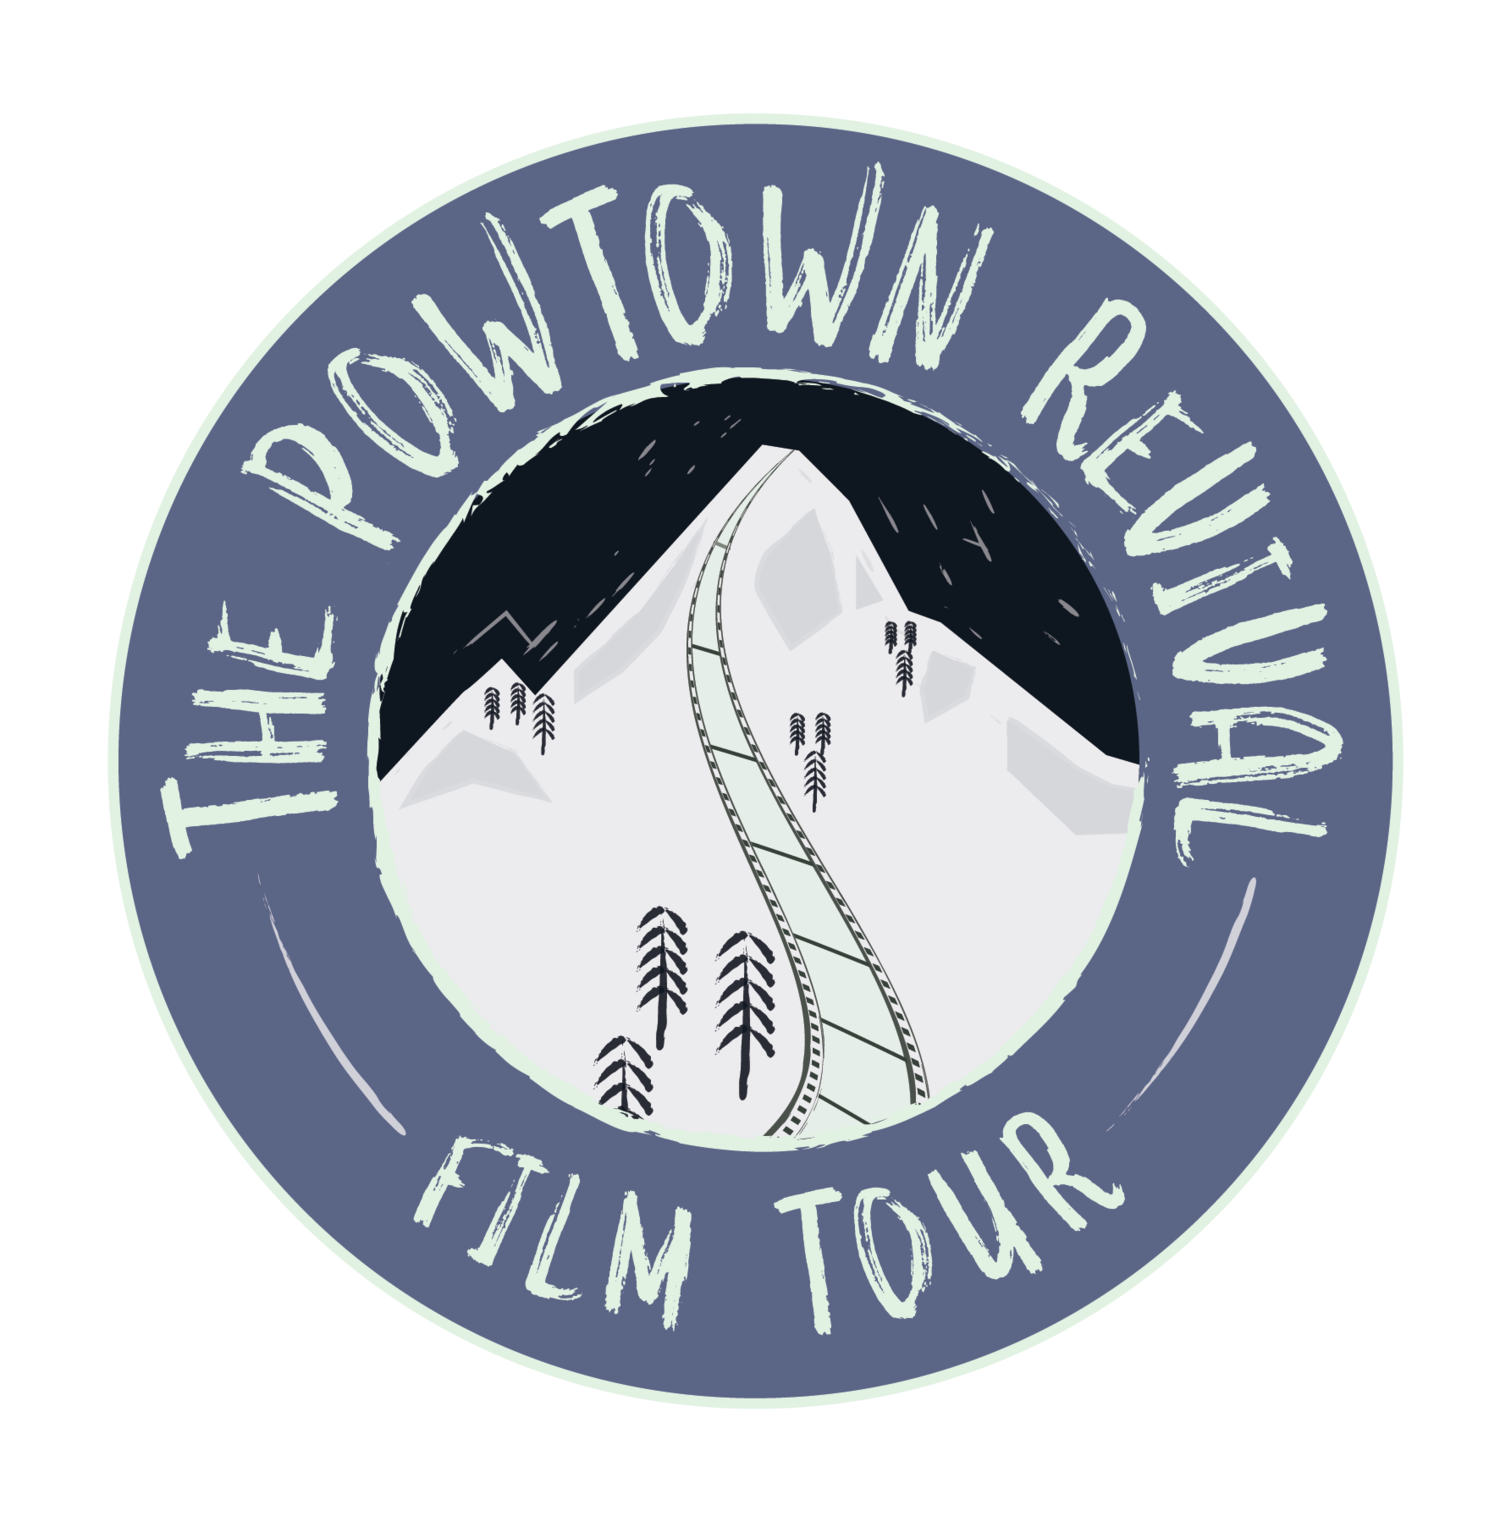 PowTown Revival